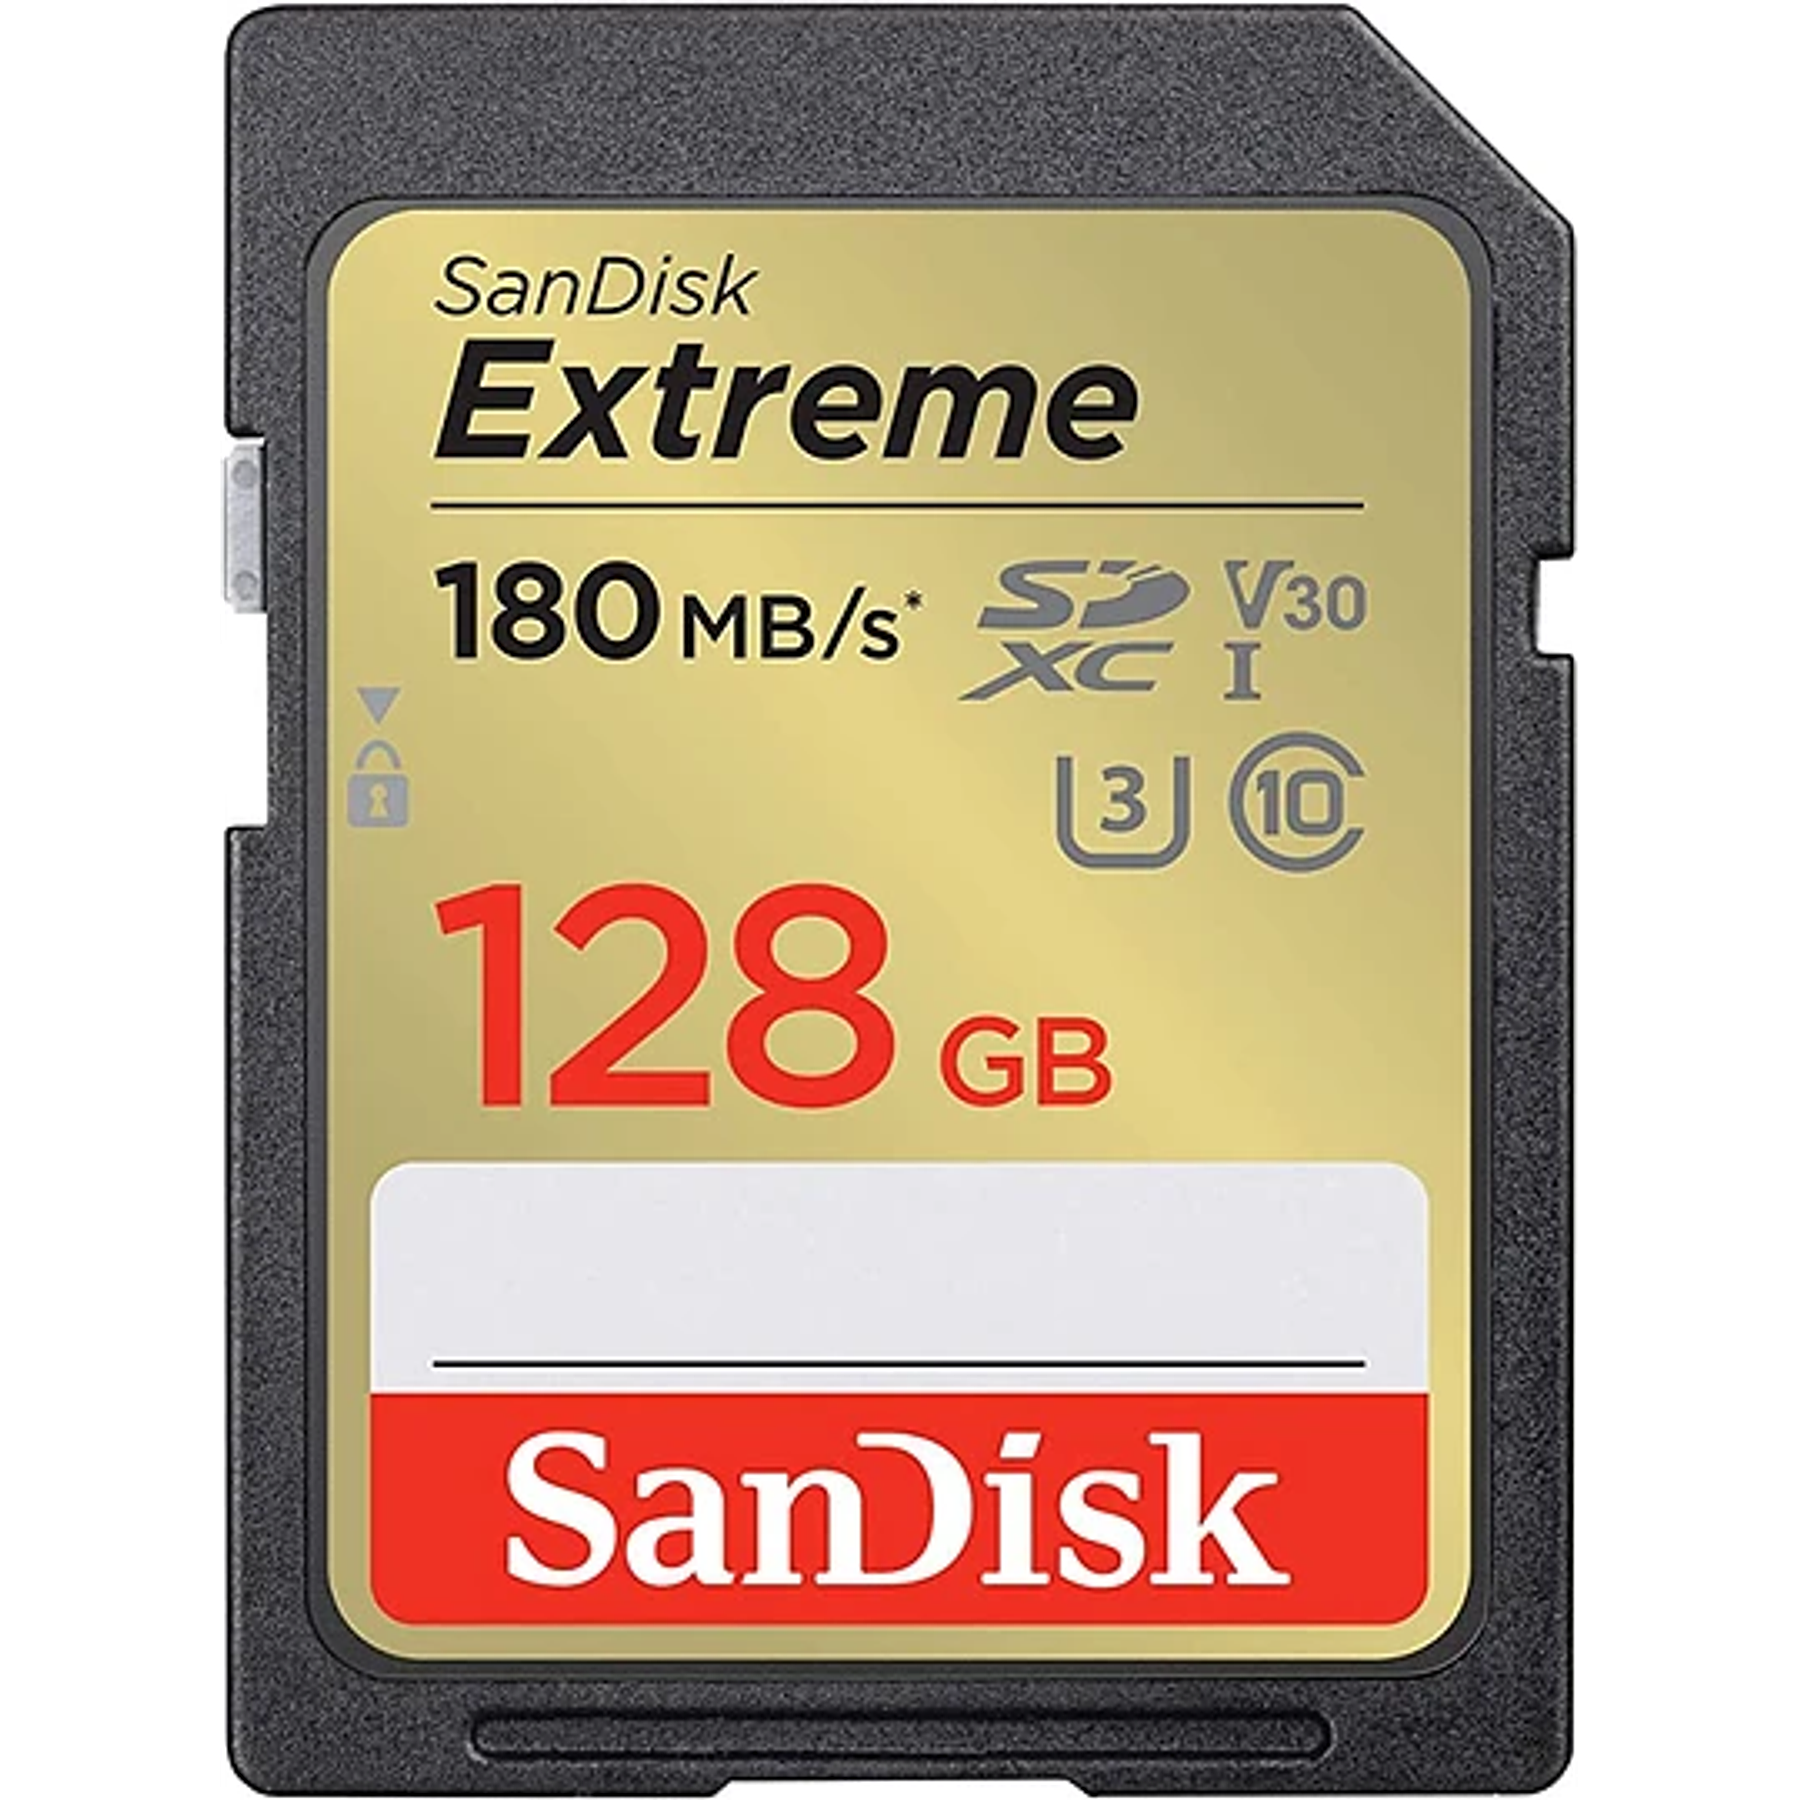 TARJETA DE MEMORIA SANDISK SD 128GB EXTREME